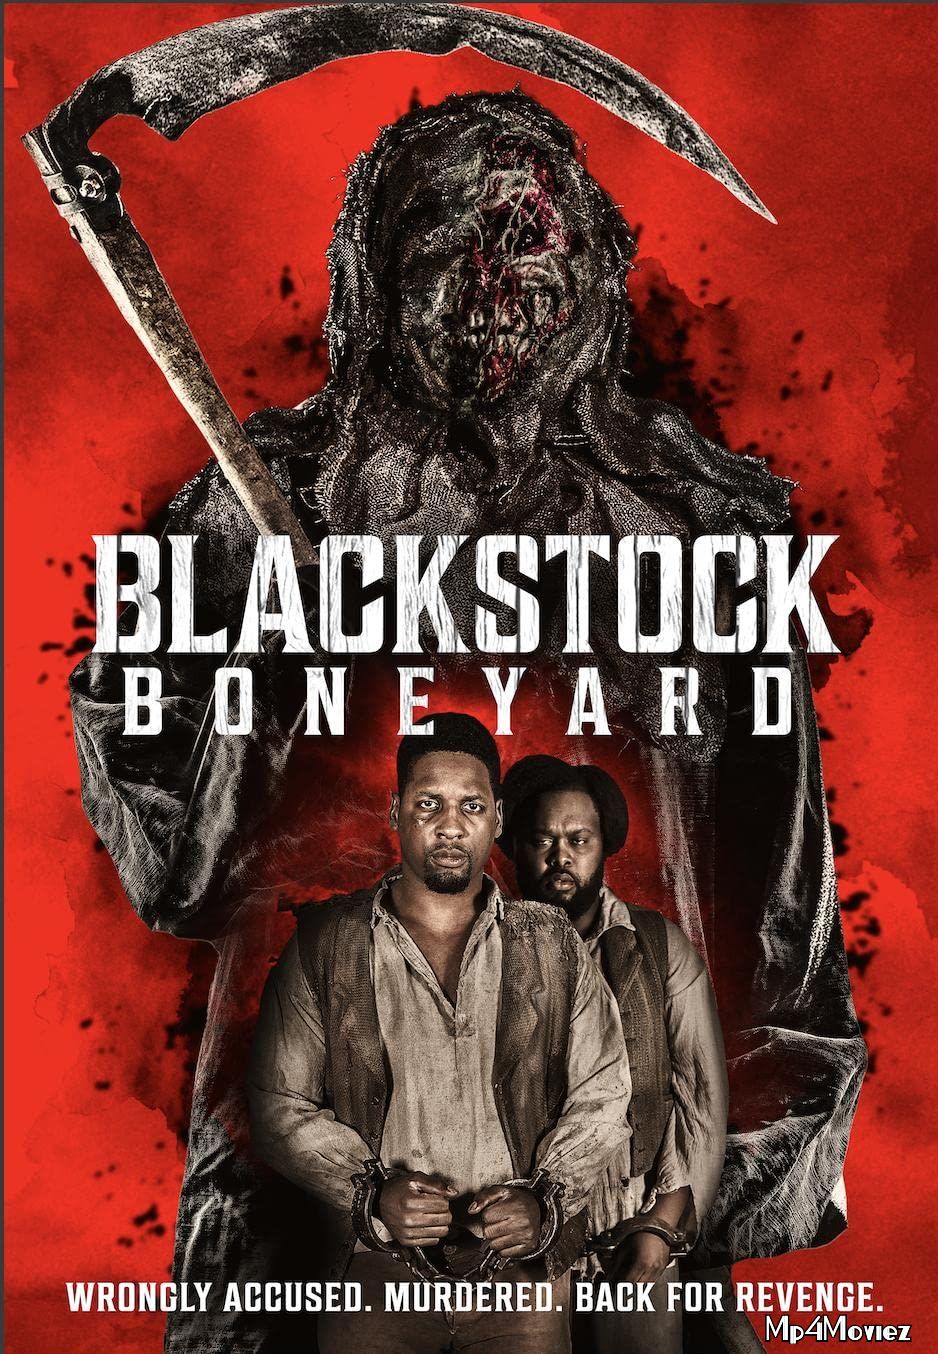 Blackstock Boneyard (2021) Hollywood HDRip download full movie